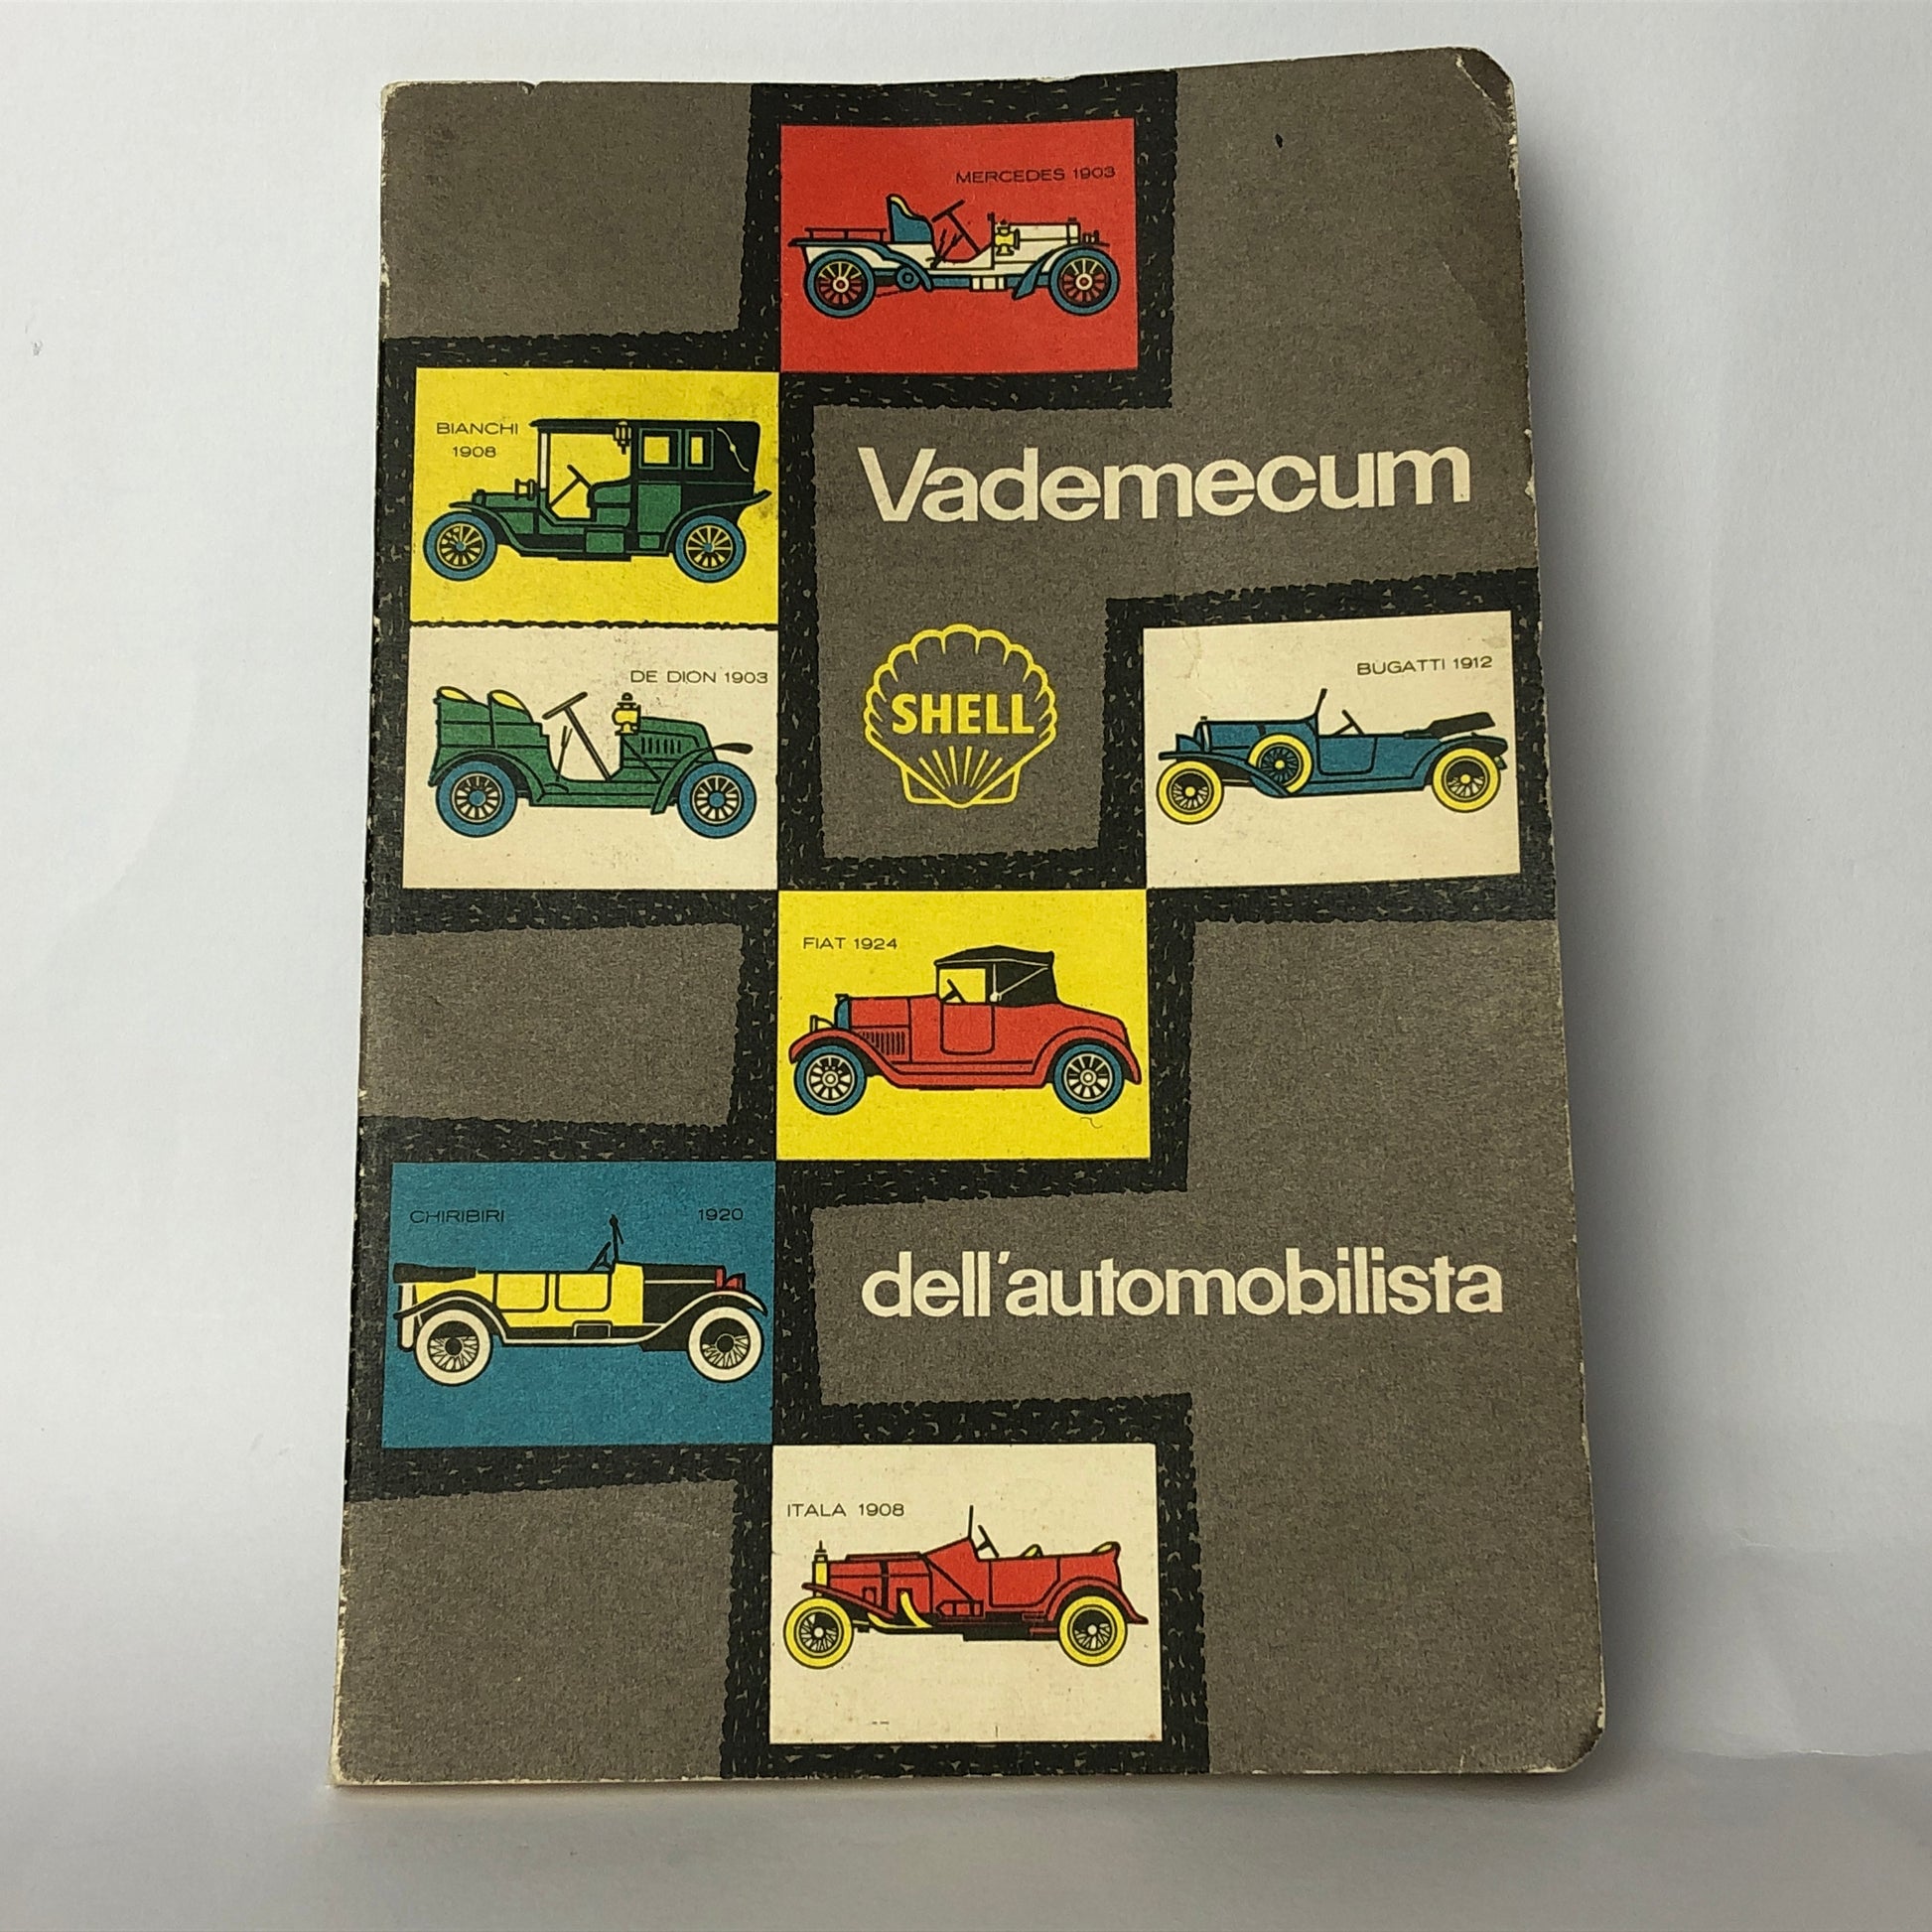 Shell, Vademecum dell'Automobilista 1962 - 1963 - Raggi's Collectibles' Automotive Art